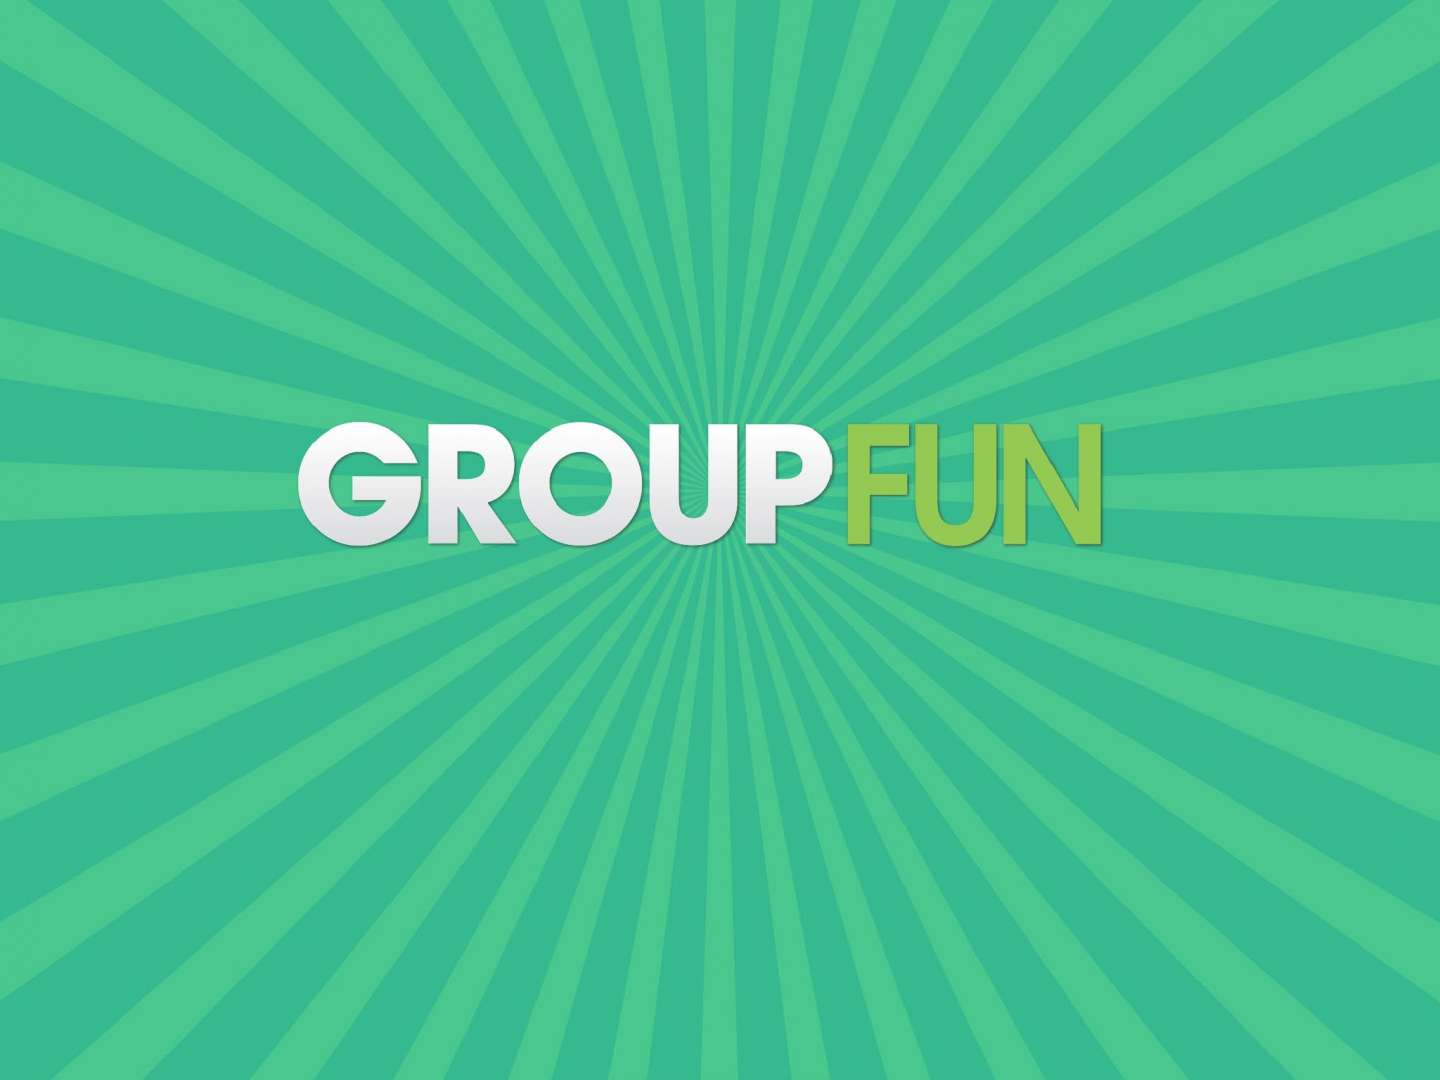 Groupfun_Boards